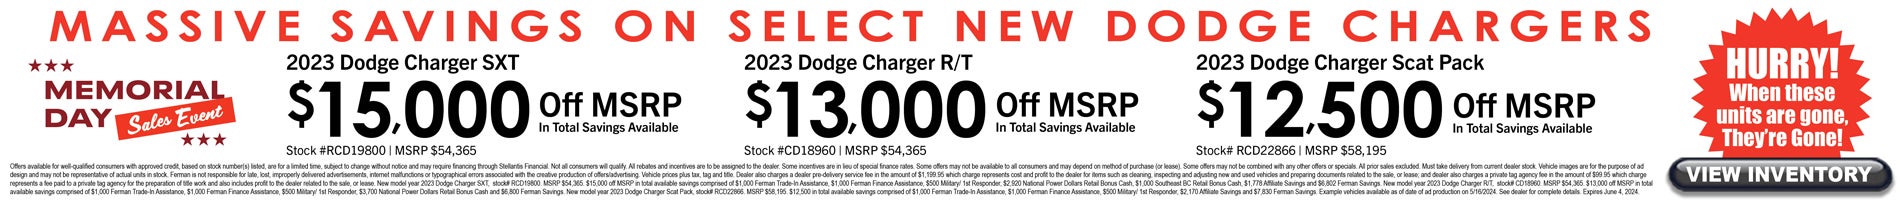 Huge May Savings on select new Dodge Chargers